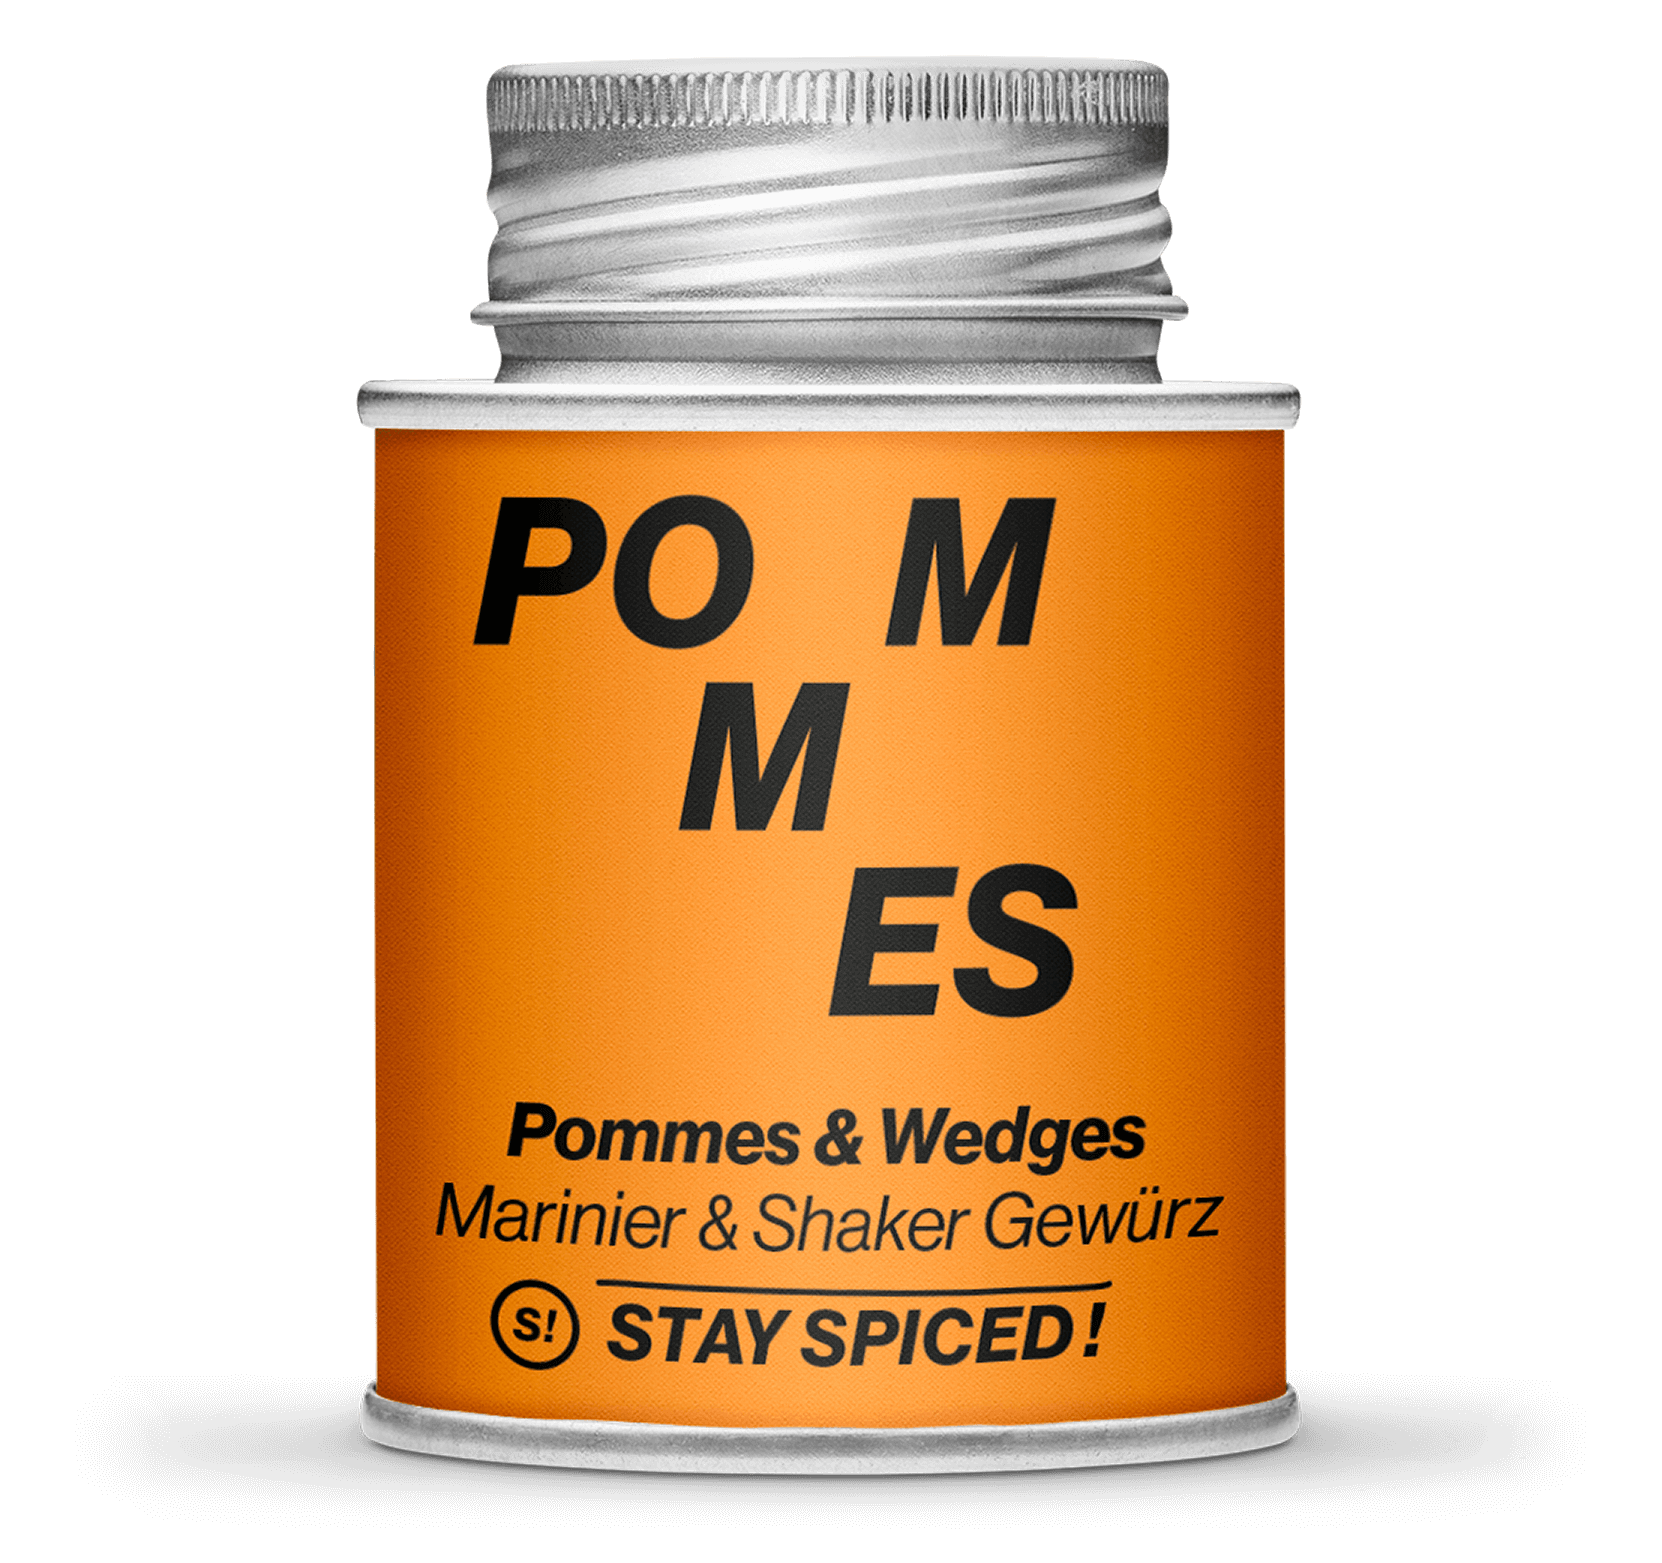 Pommes & Wedges - Marinier & Shaker Gewürz